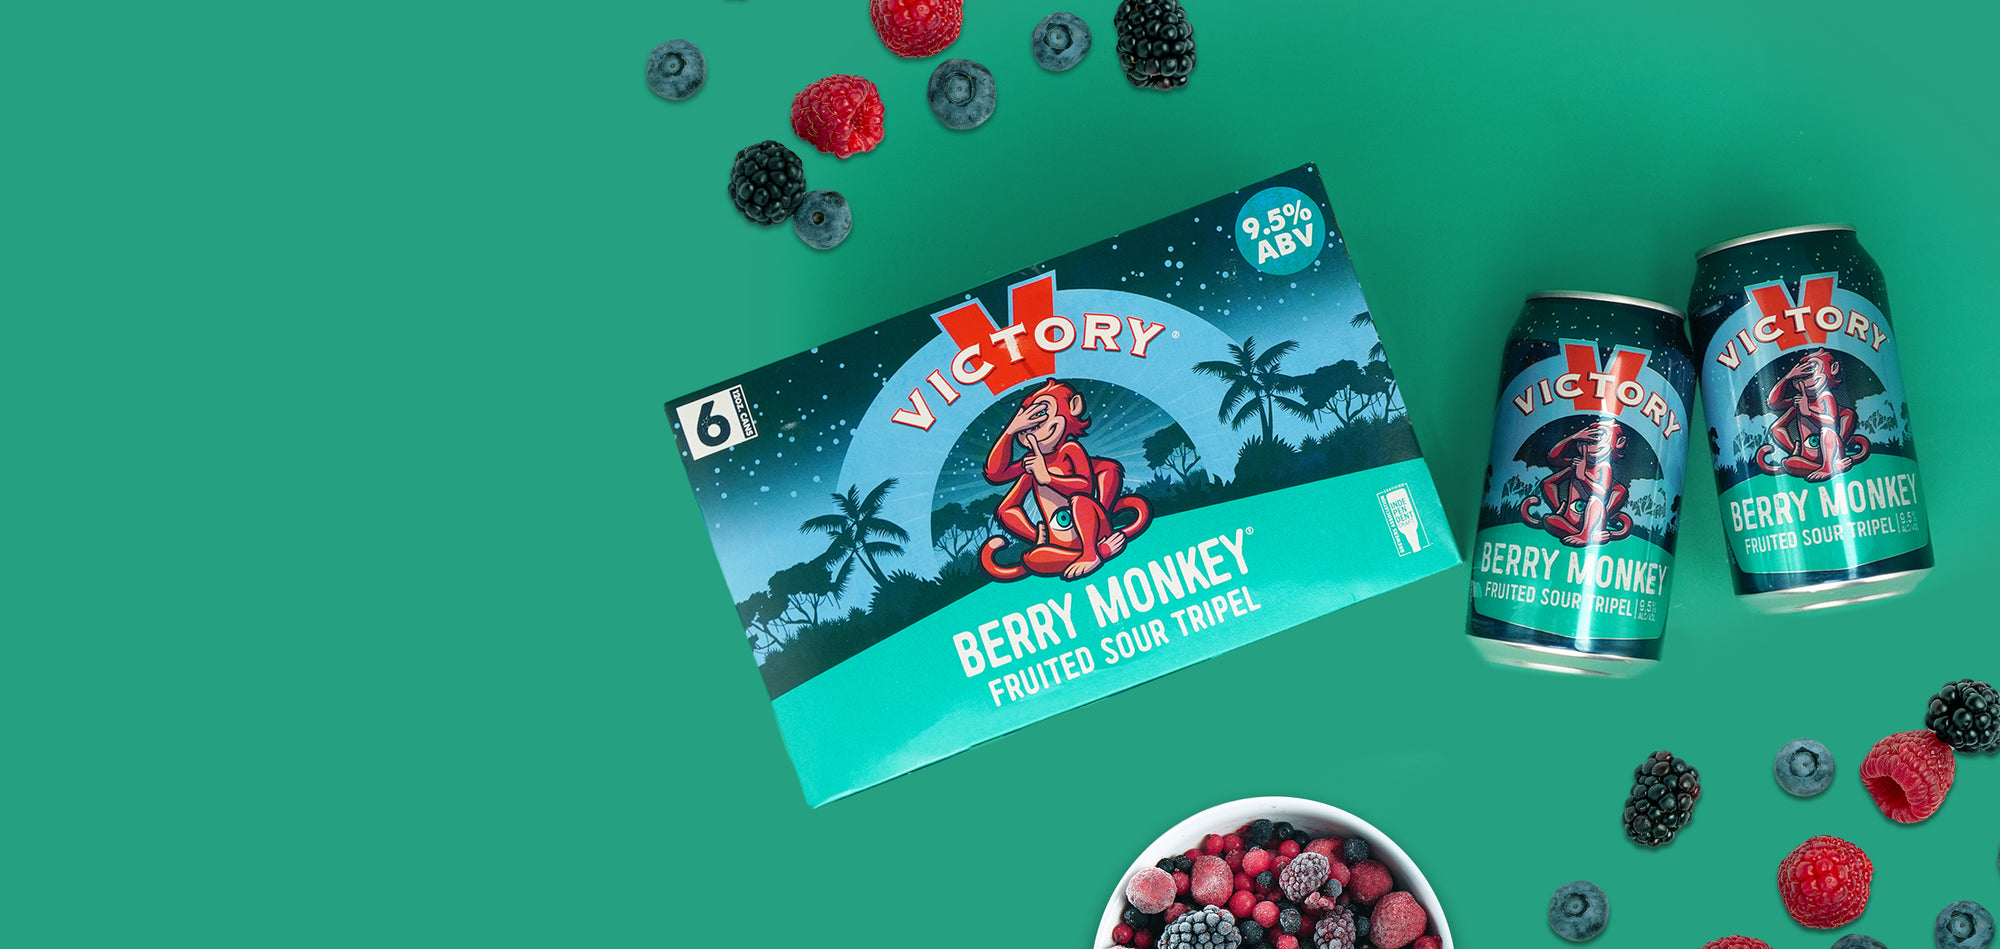 Victory Berry Monkey Fruited Sour Belgian-style Tripel